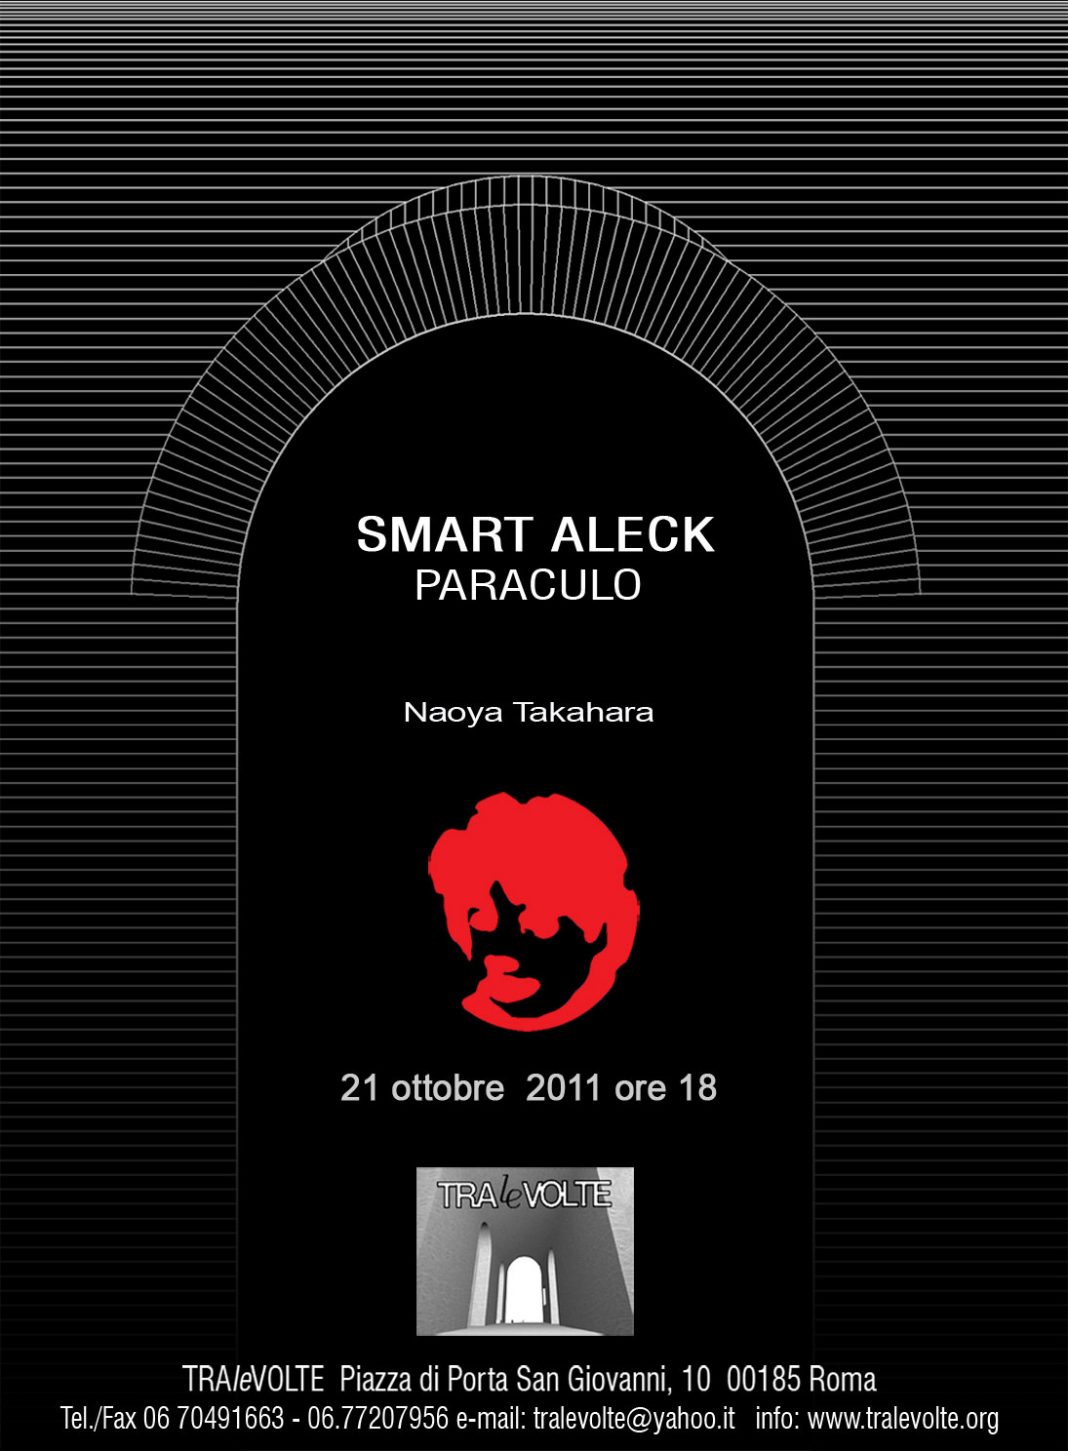 Naoya Takahara – Smart Aleck / Paraculohttps://www.exibart.com/repository/media/eventi/2011/10/naoya-takahara-8211-smart-aleck-paraculo-1068x1451.jpg